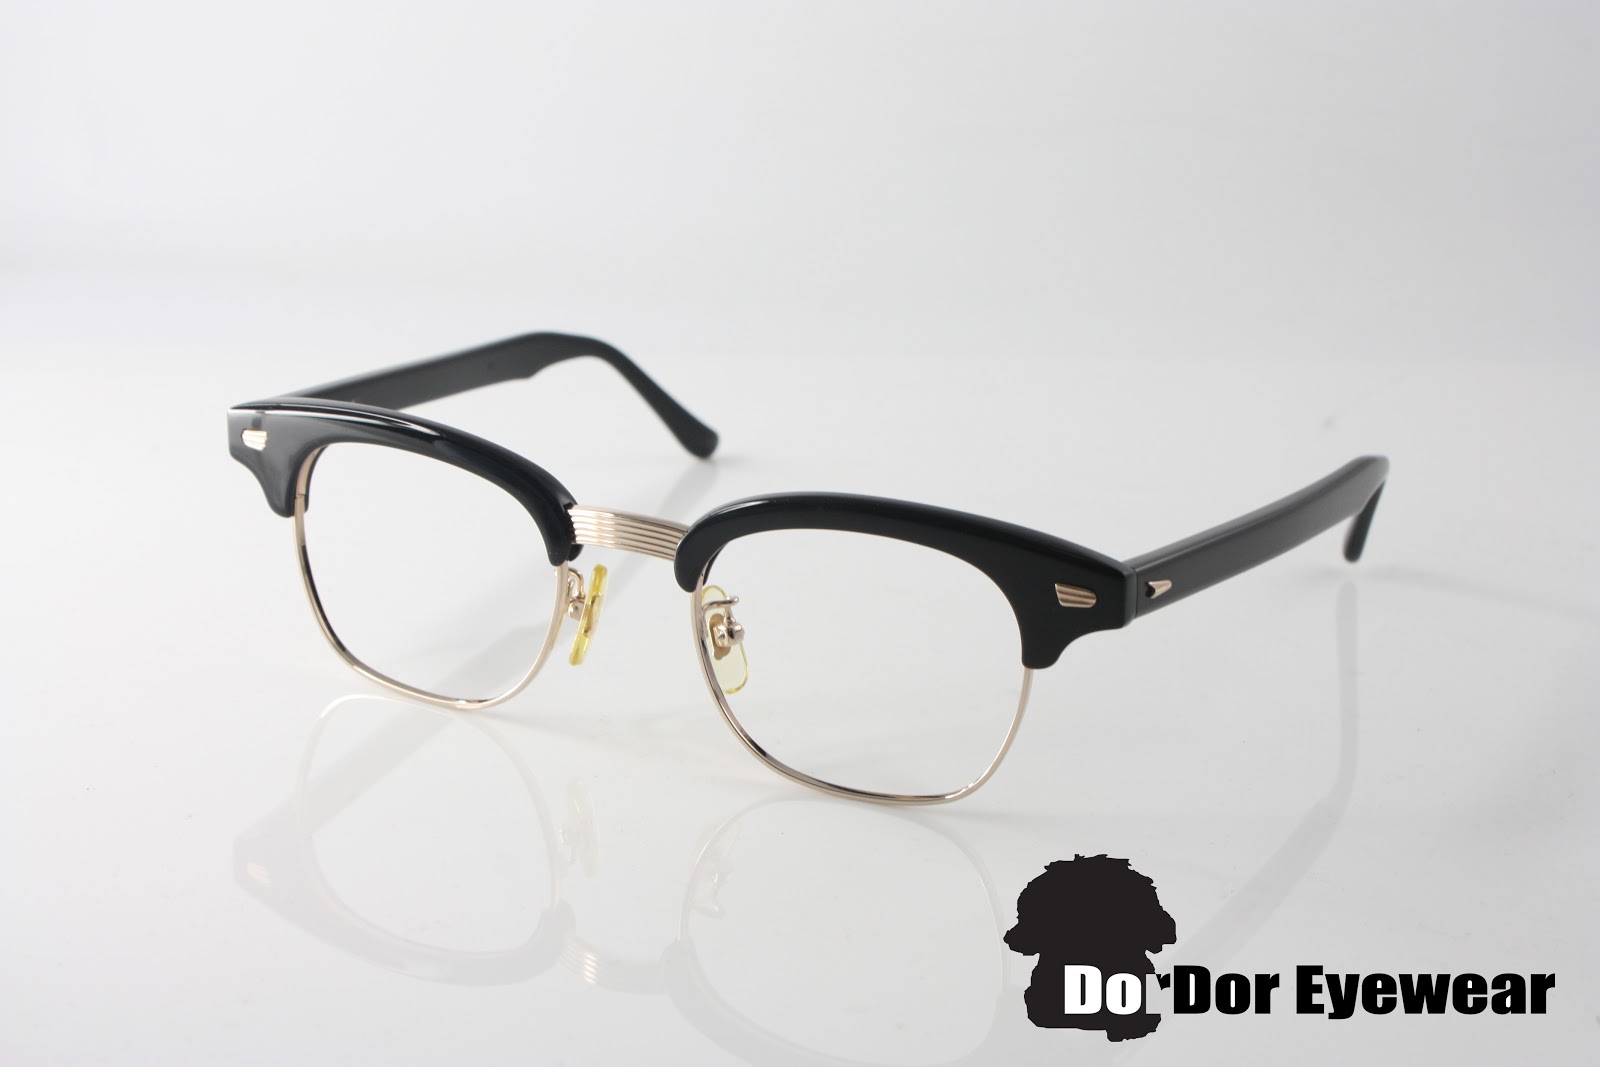 DorDor Eyewear: 白山眼鏡店最新型號- POST 及LINDY BROW - 攻港潮人!